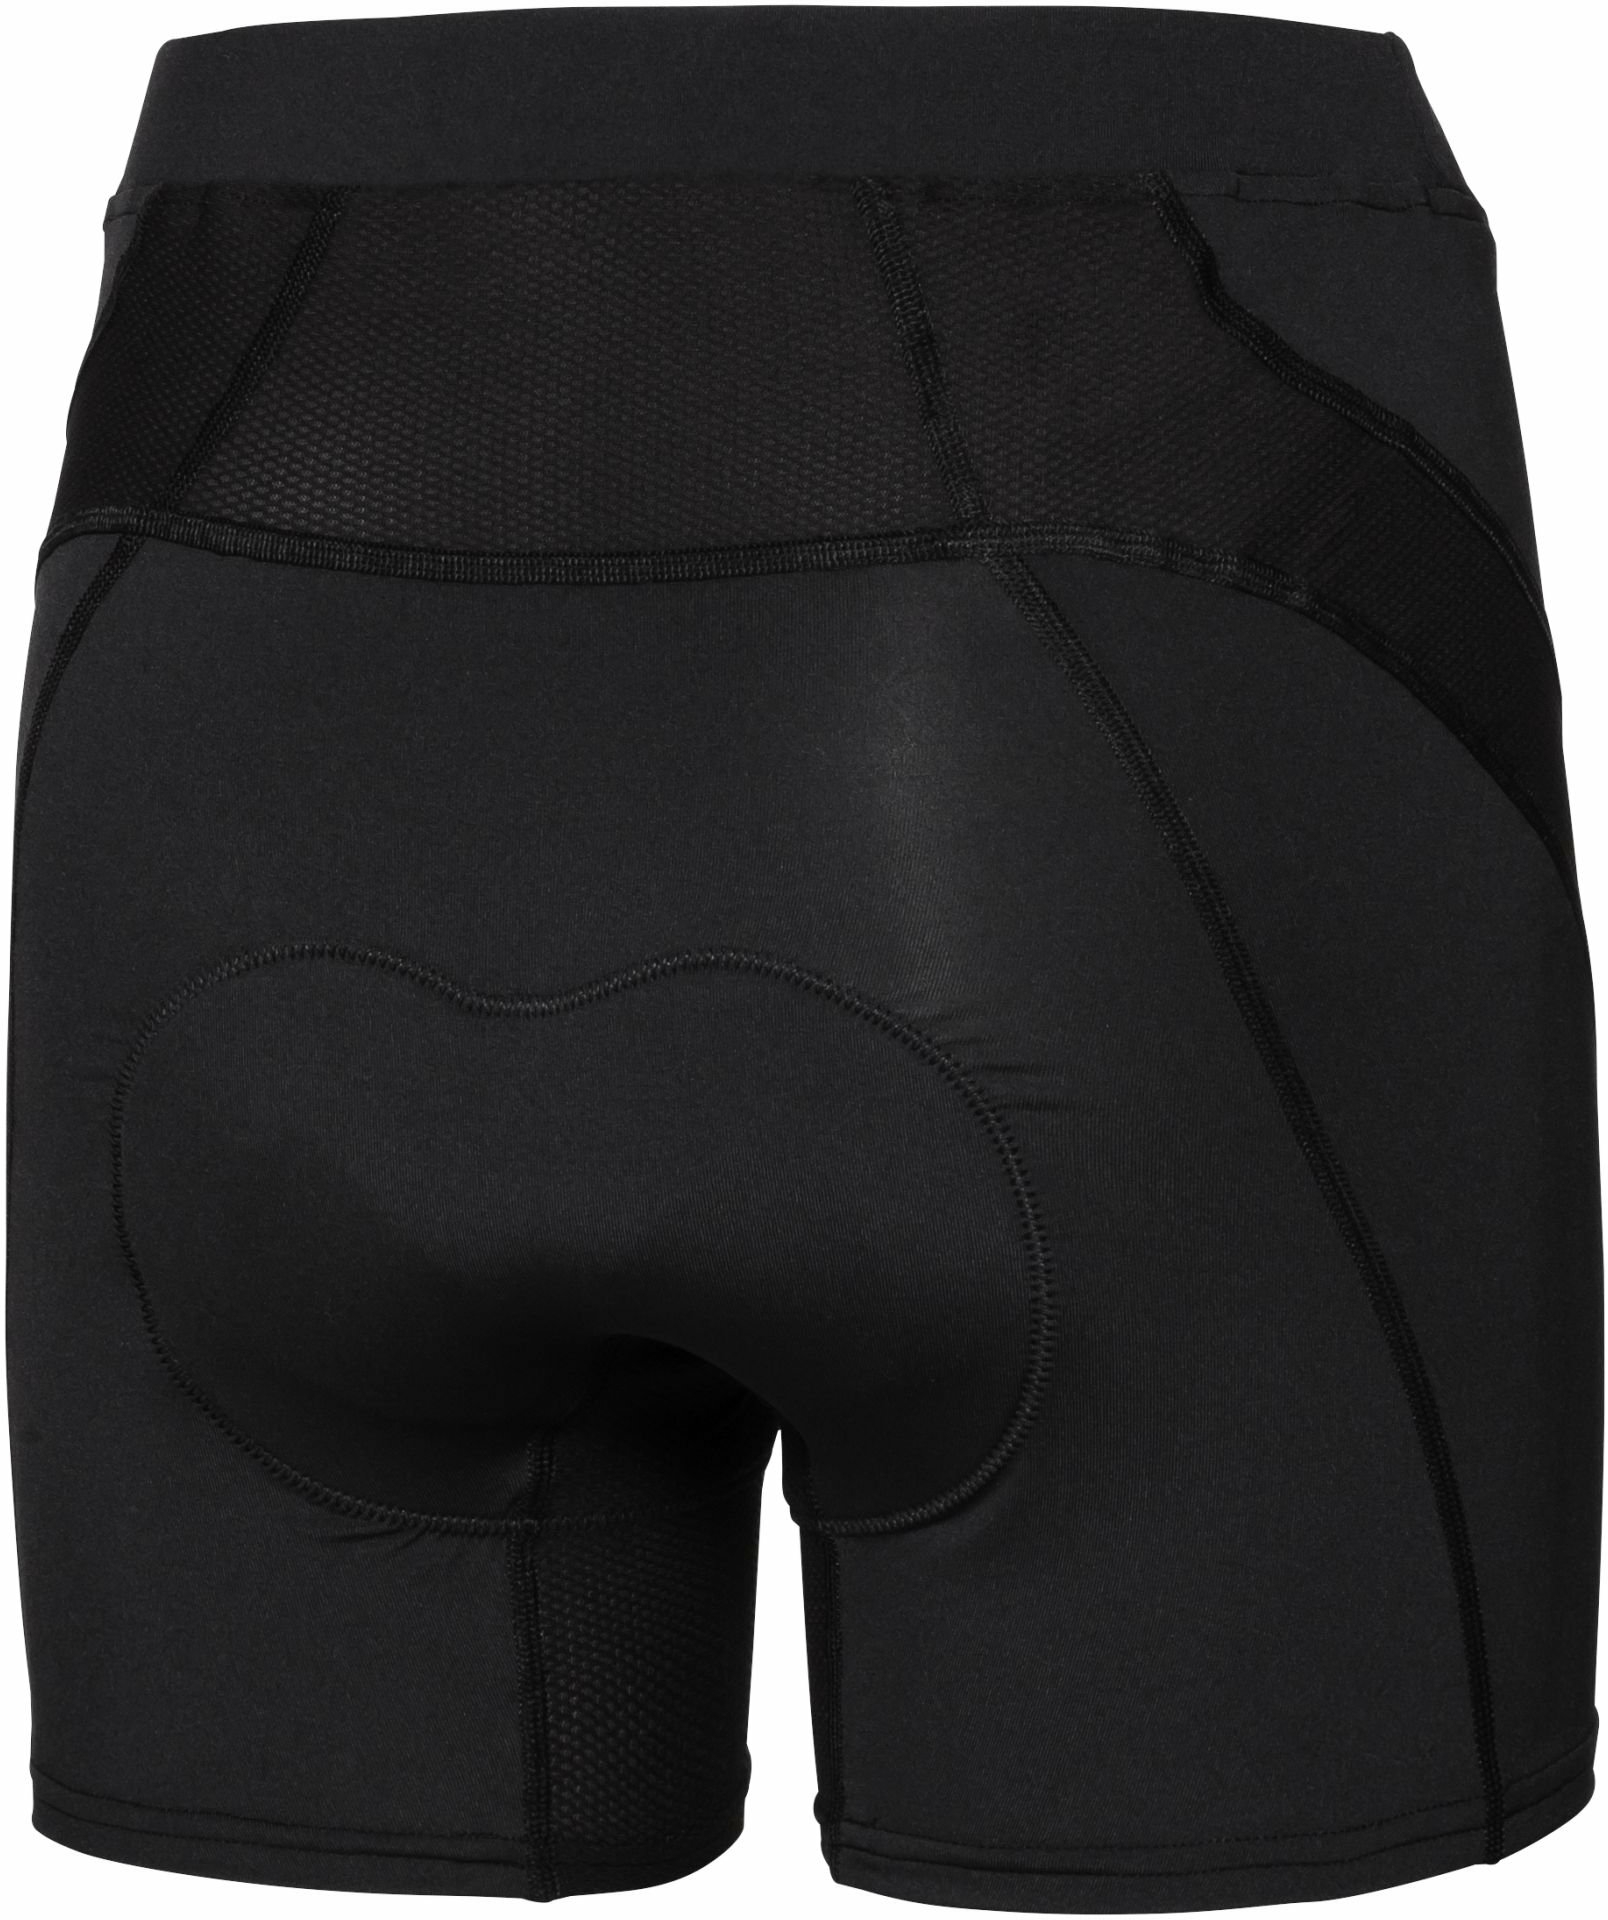 Apura Damen Unterhose Baselayer Shorts 2.0